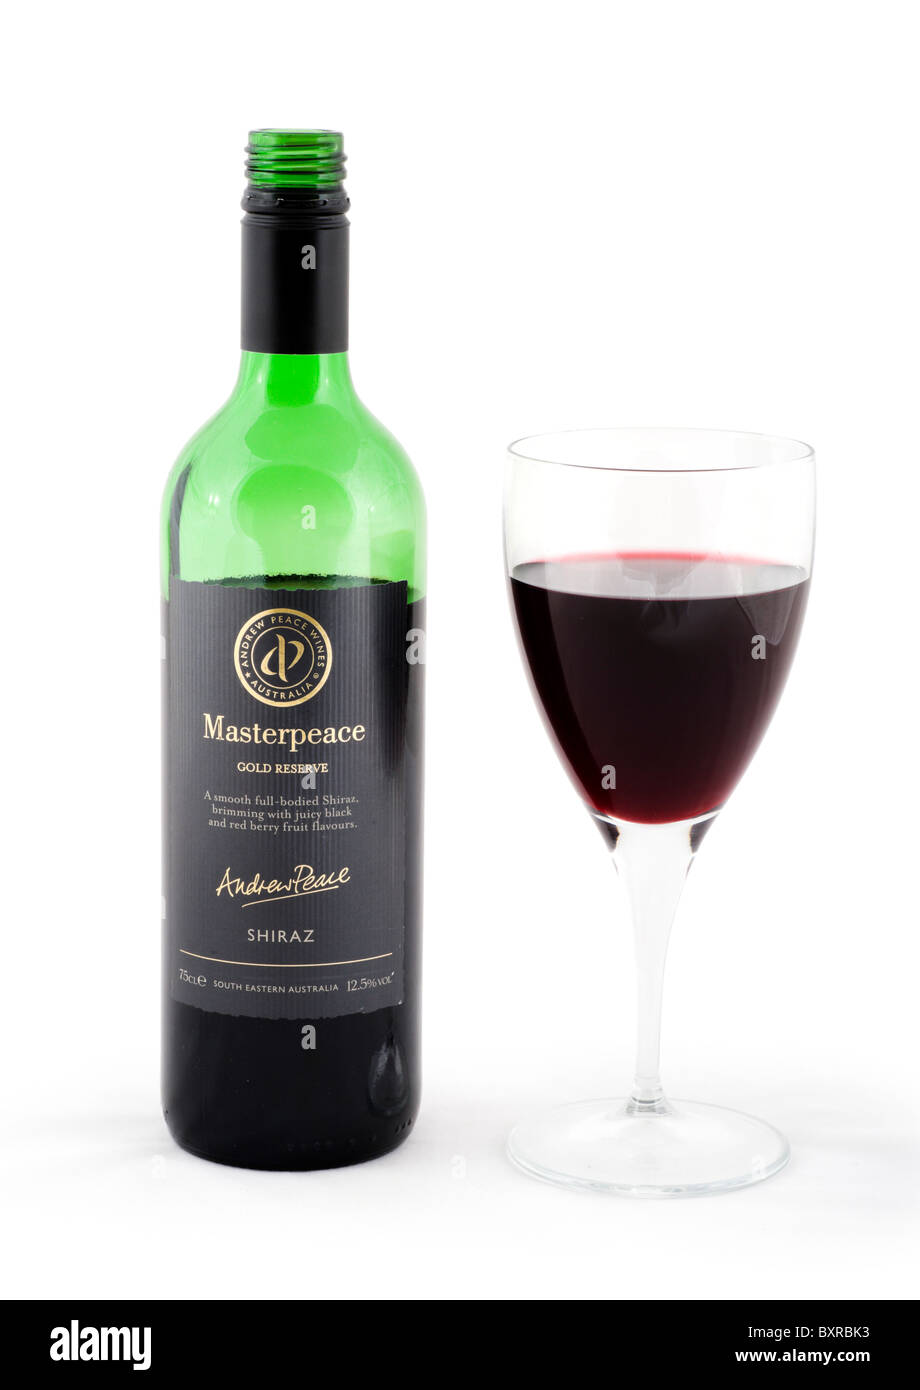 Botella y copa de vino tinto Shiraz de Australia, Reino Unido Foto de stock